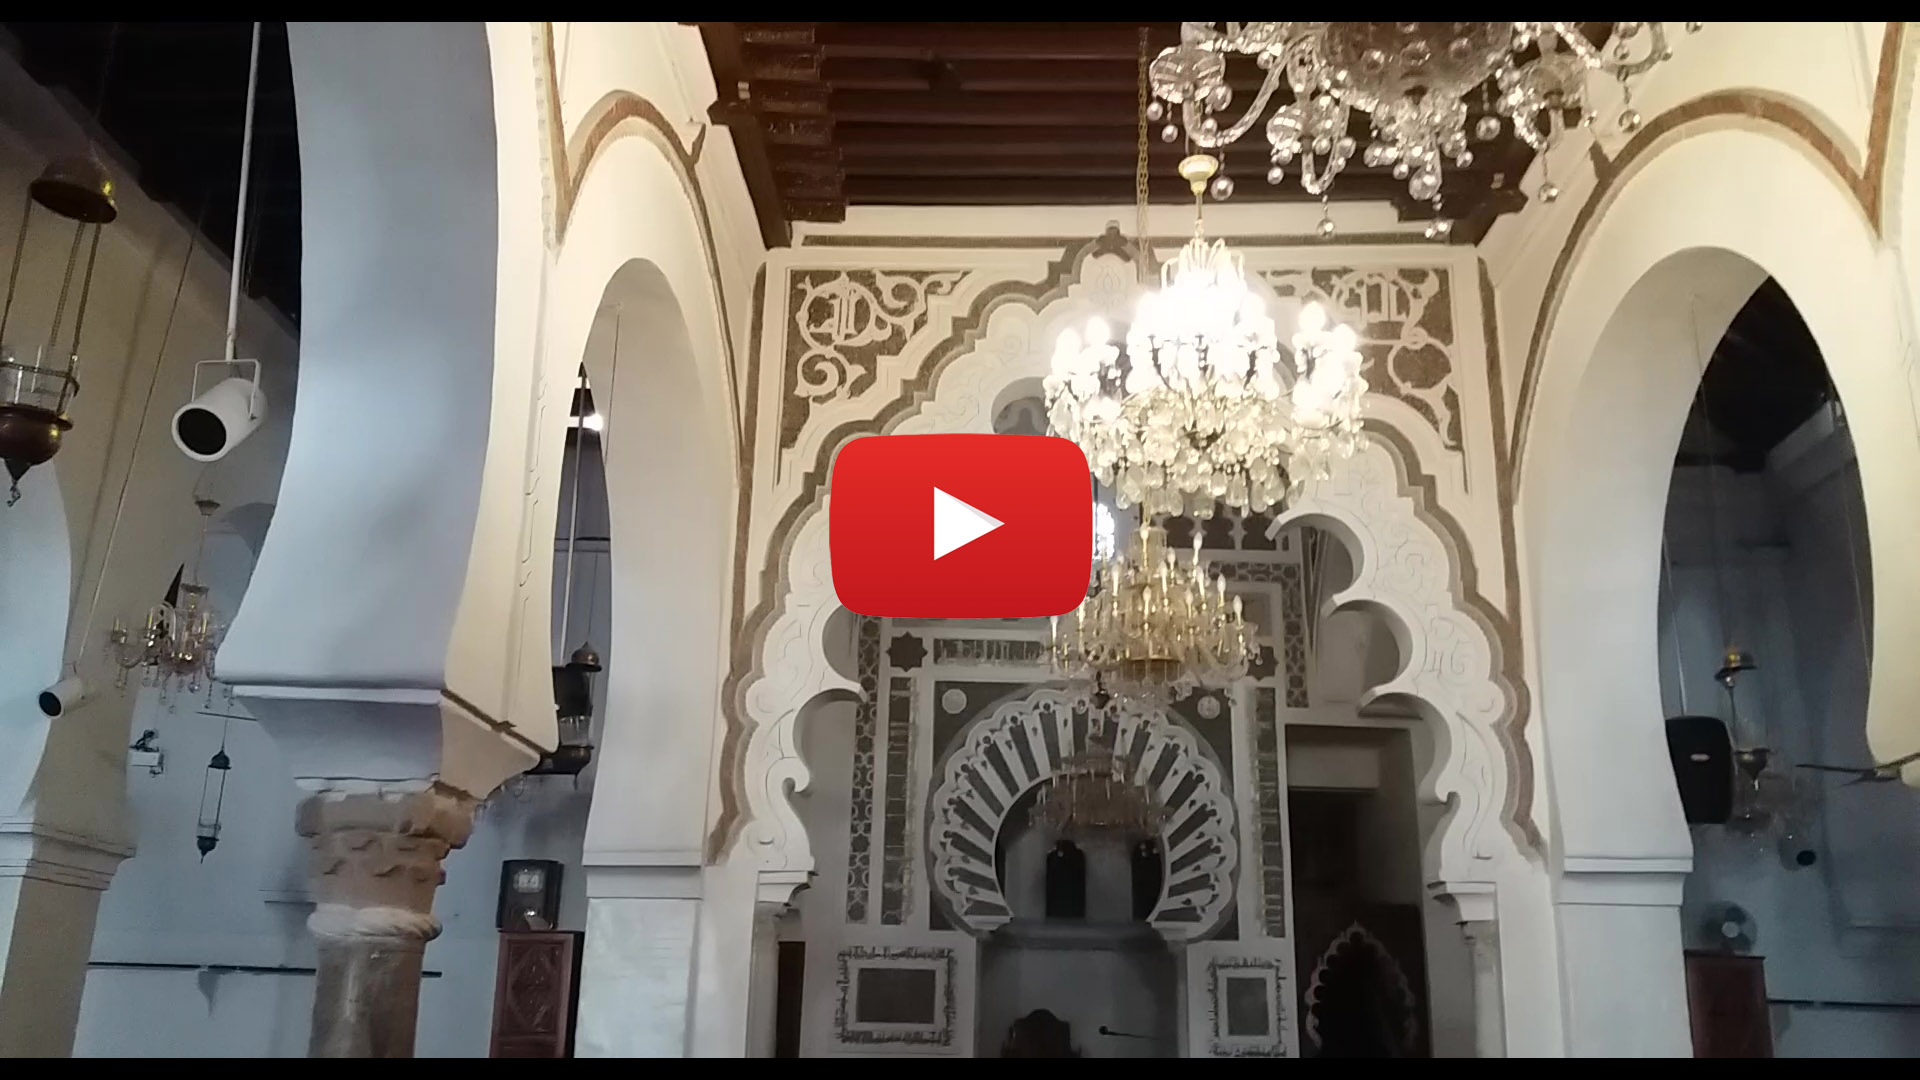 The Great Mosque of Tlemcen